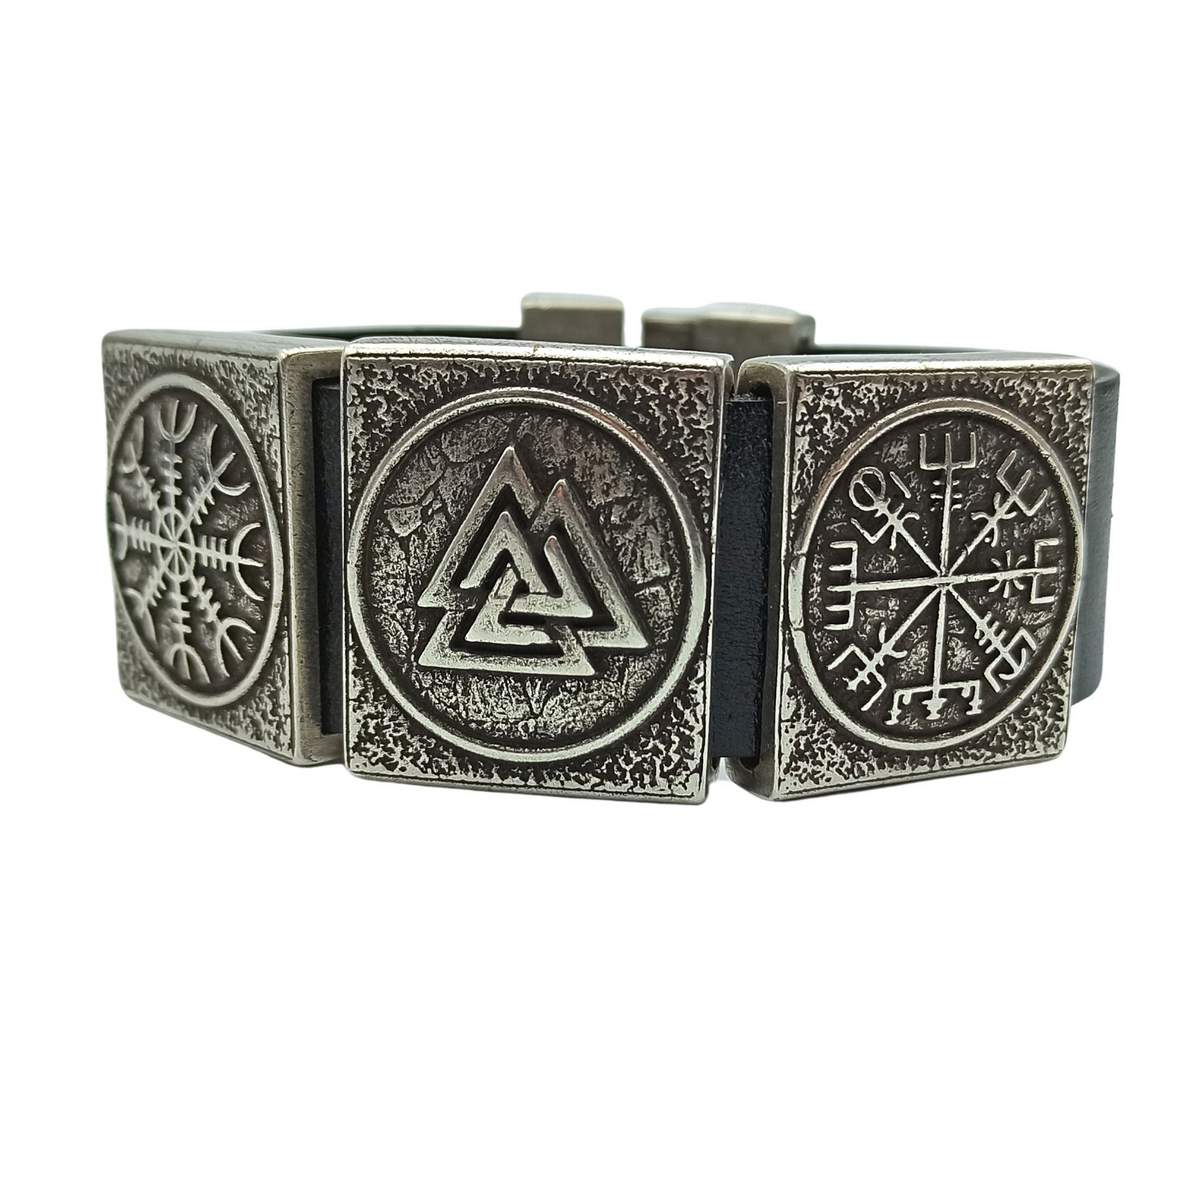 Viking rune leather bracelet 16 cm | 6.3 inch Silver plated bronze 